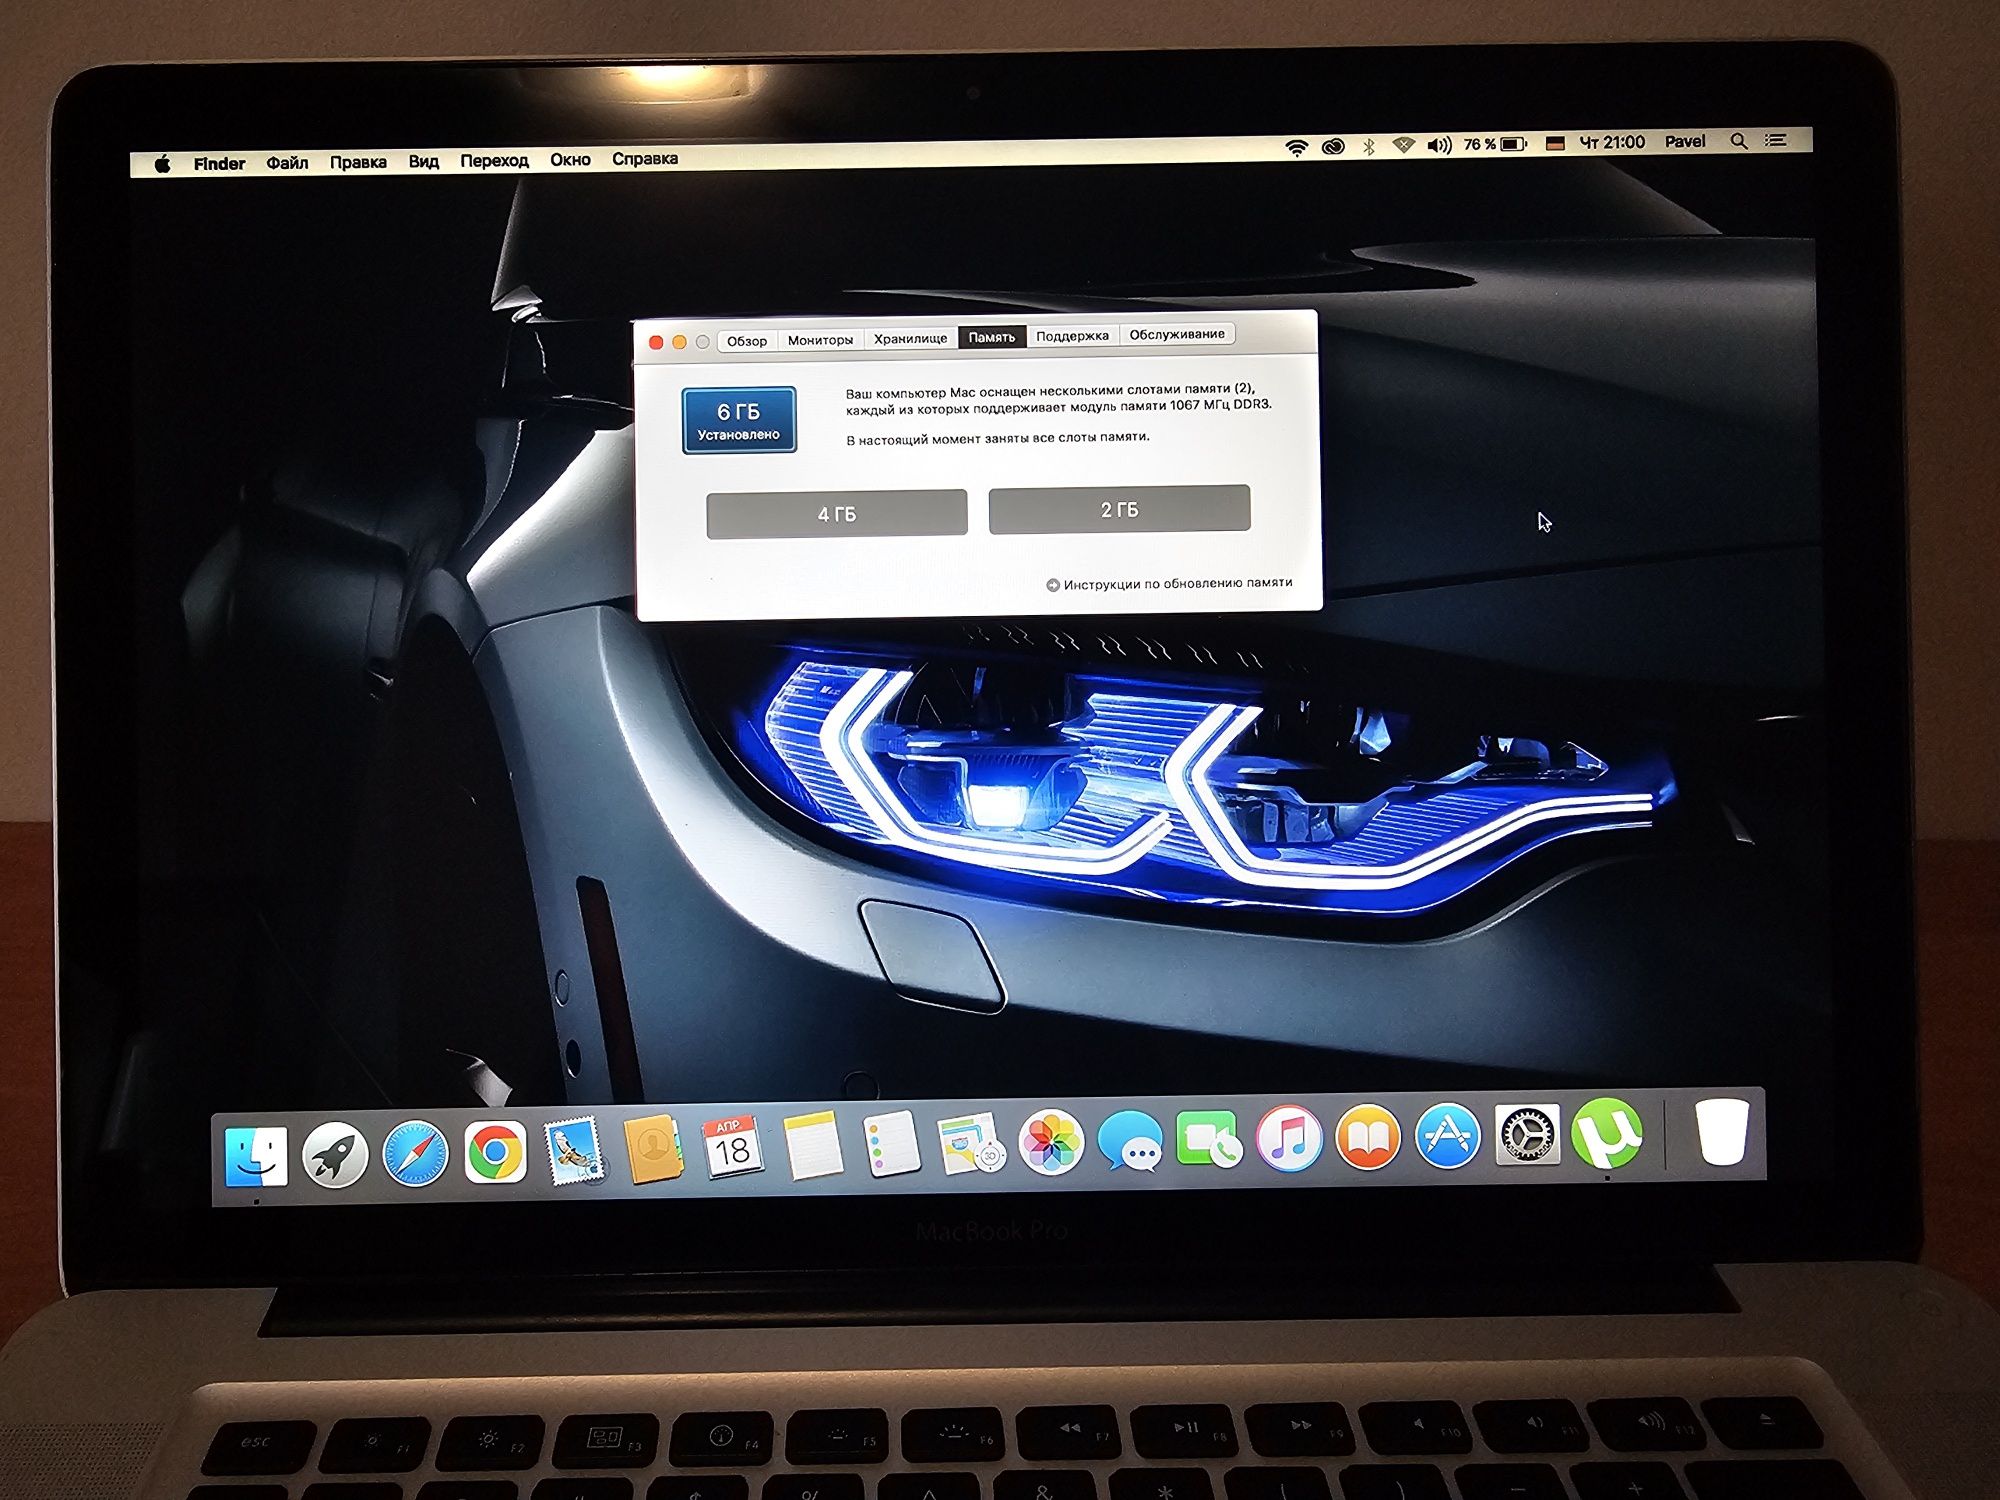 Macbook 15 Pro OS Capitan+Windows 10